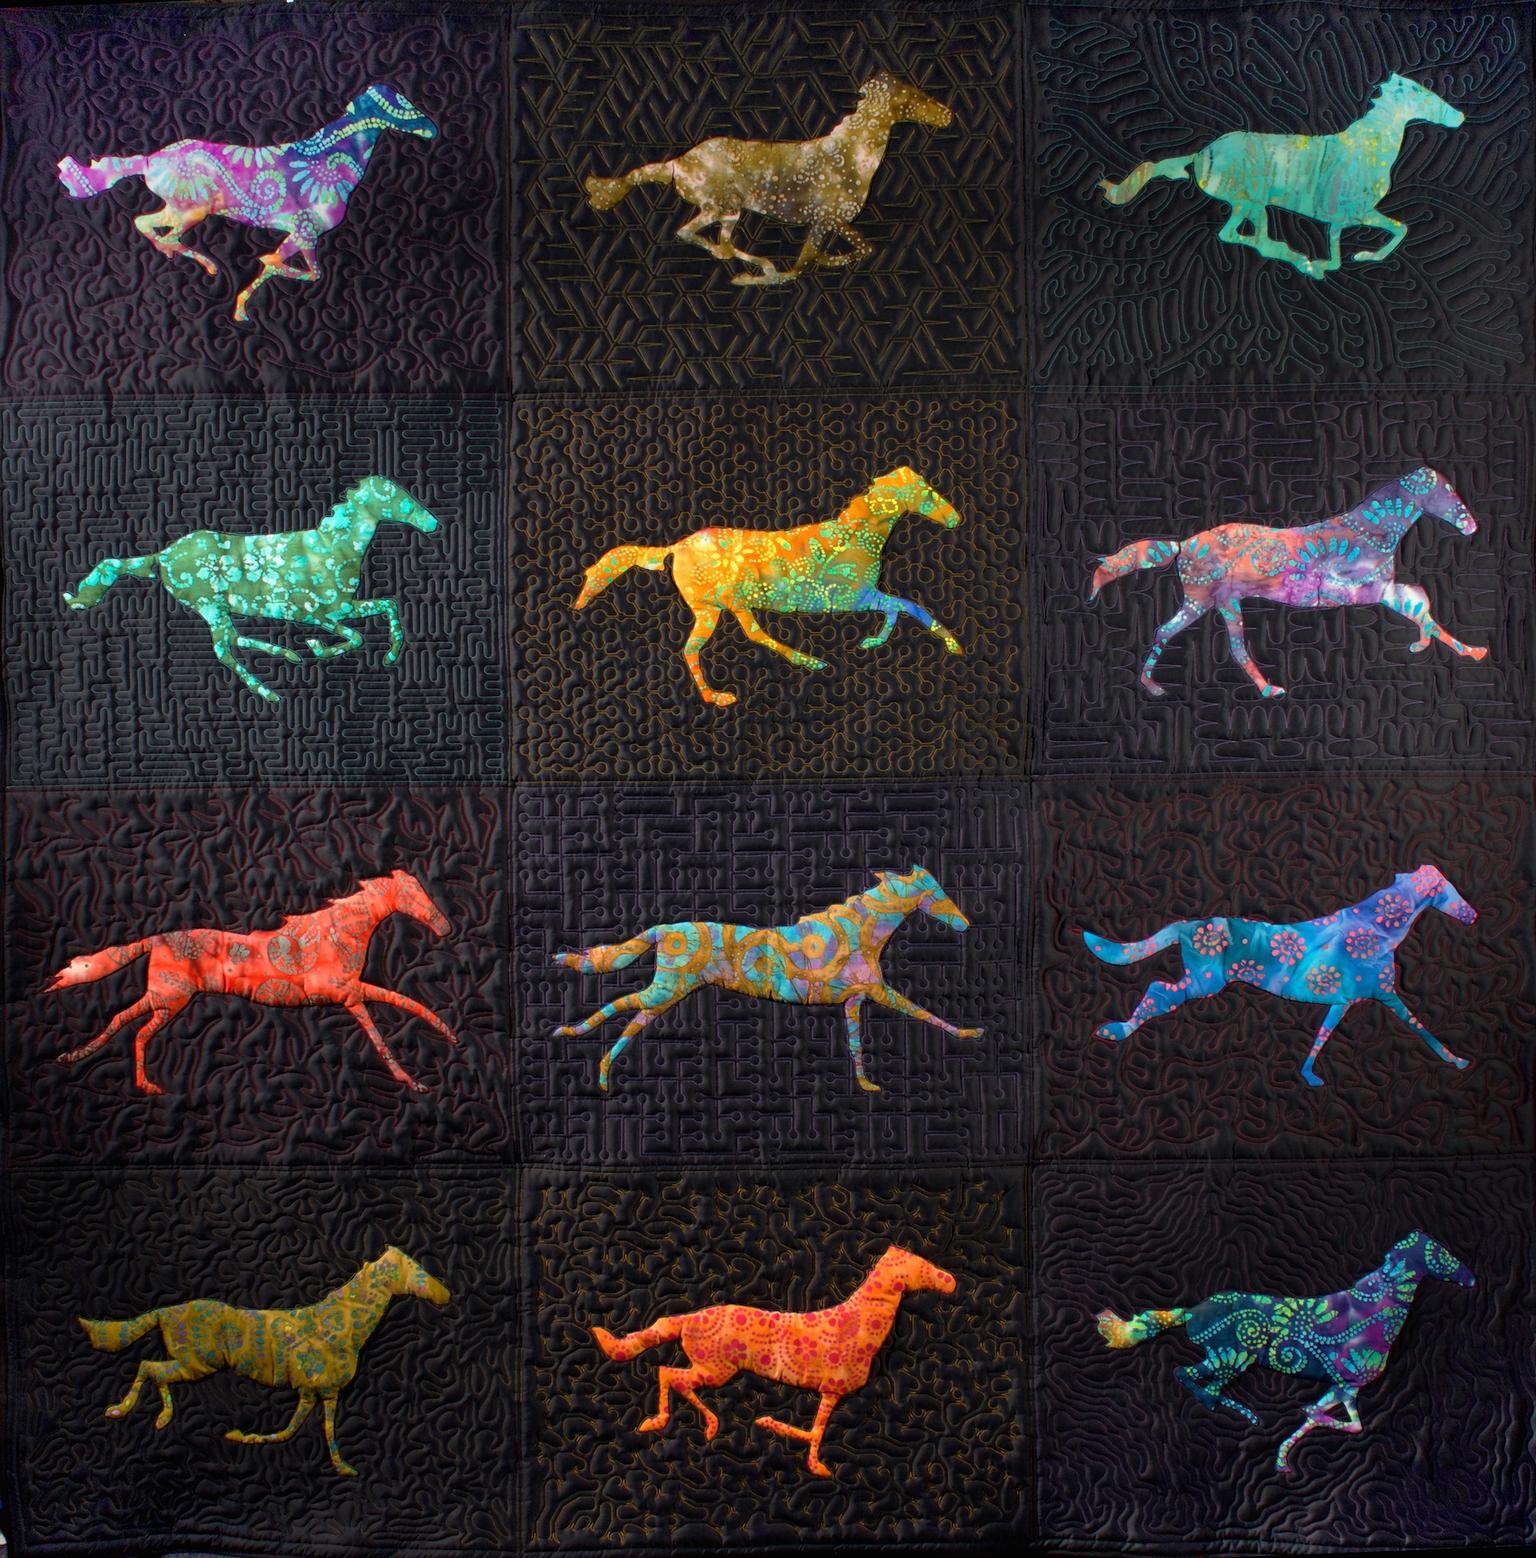 Image for entry 'Muybridge Horses Quilt'